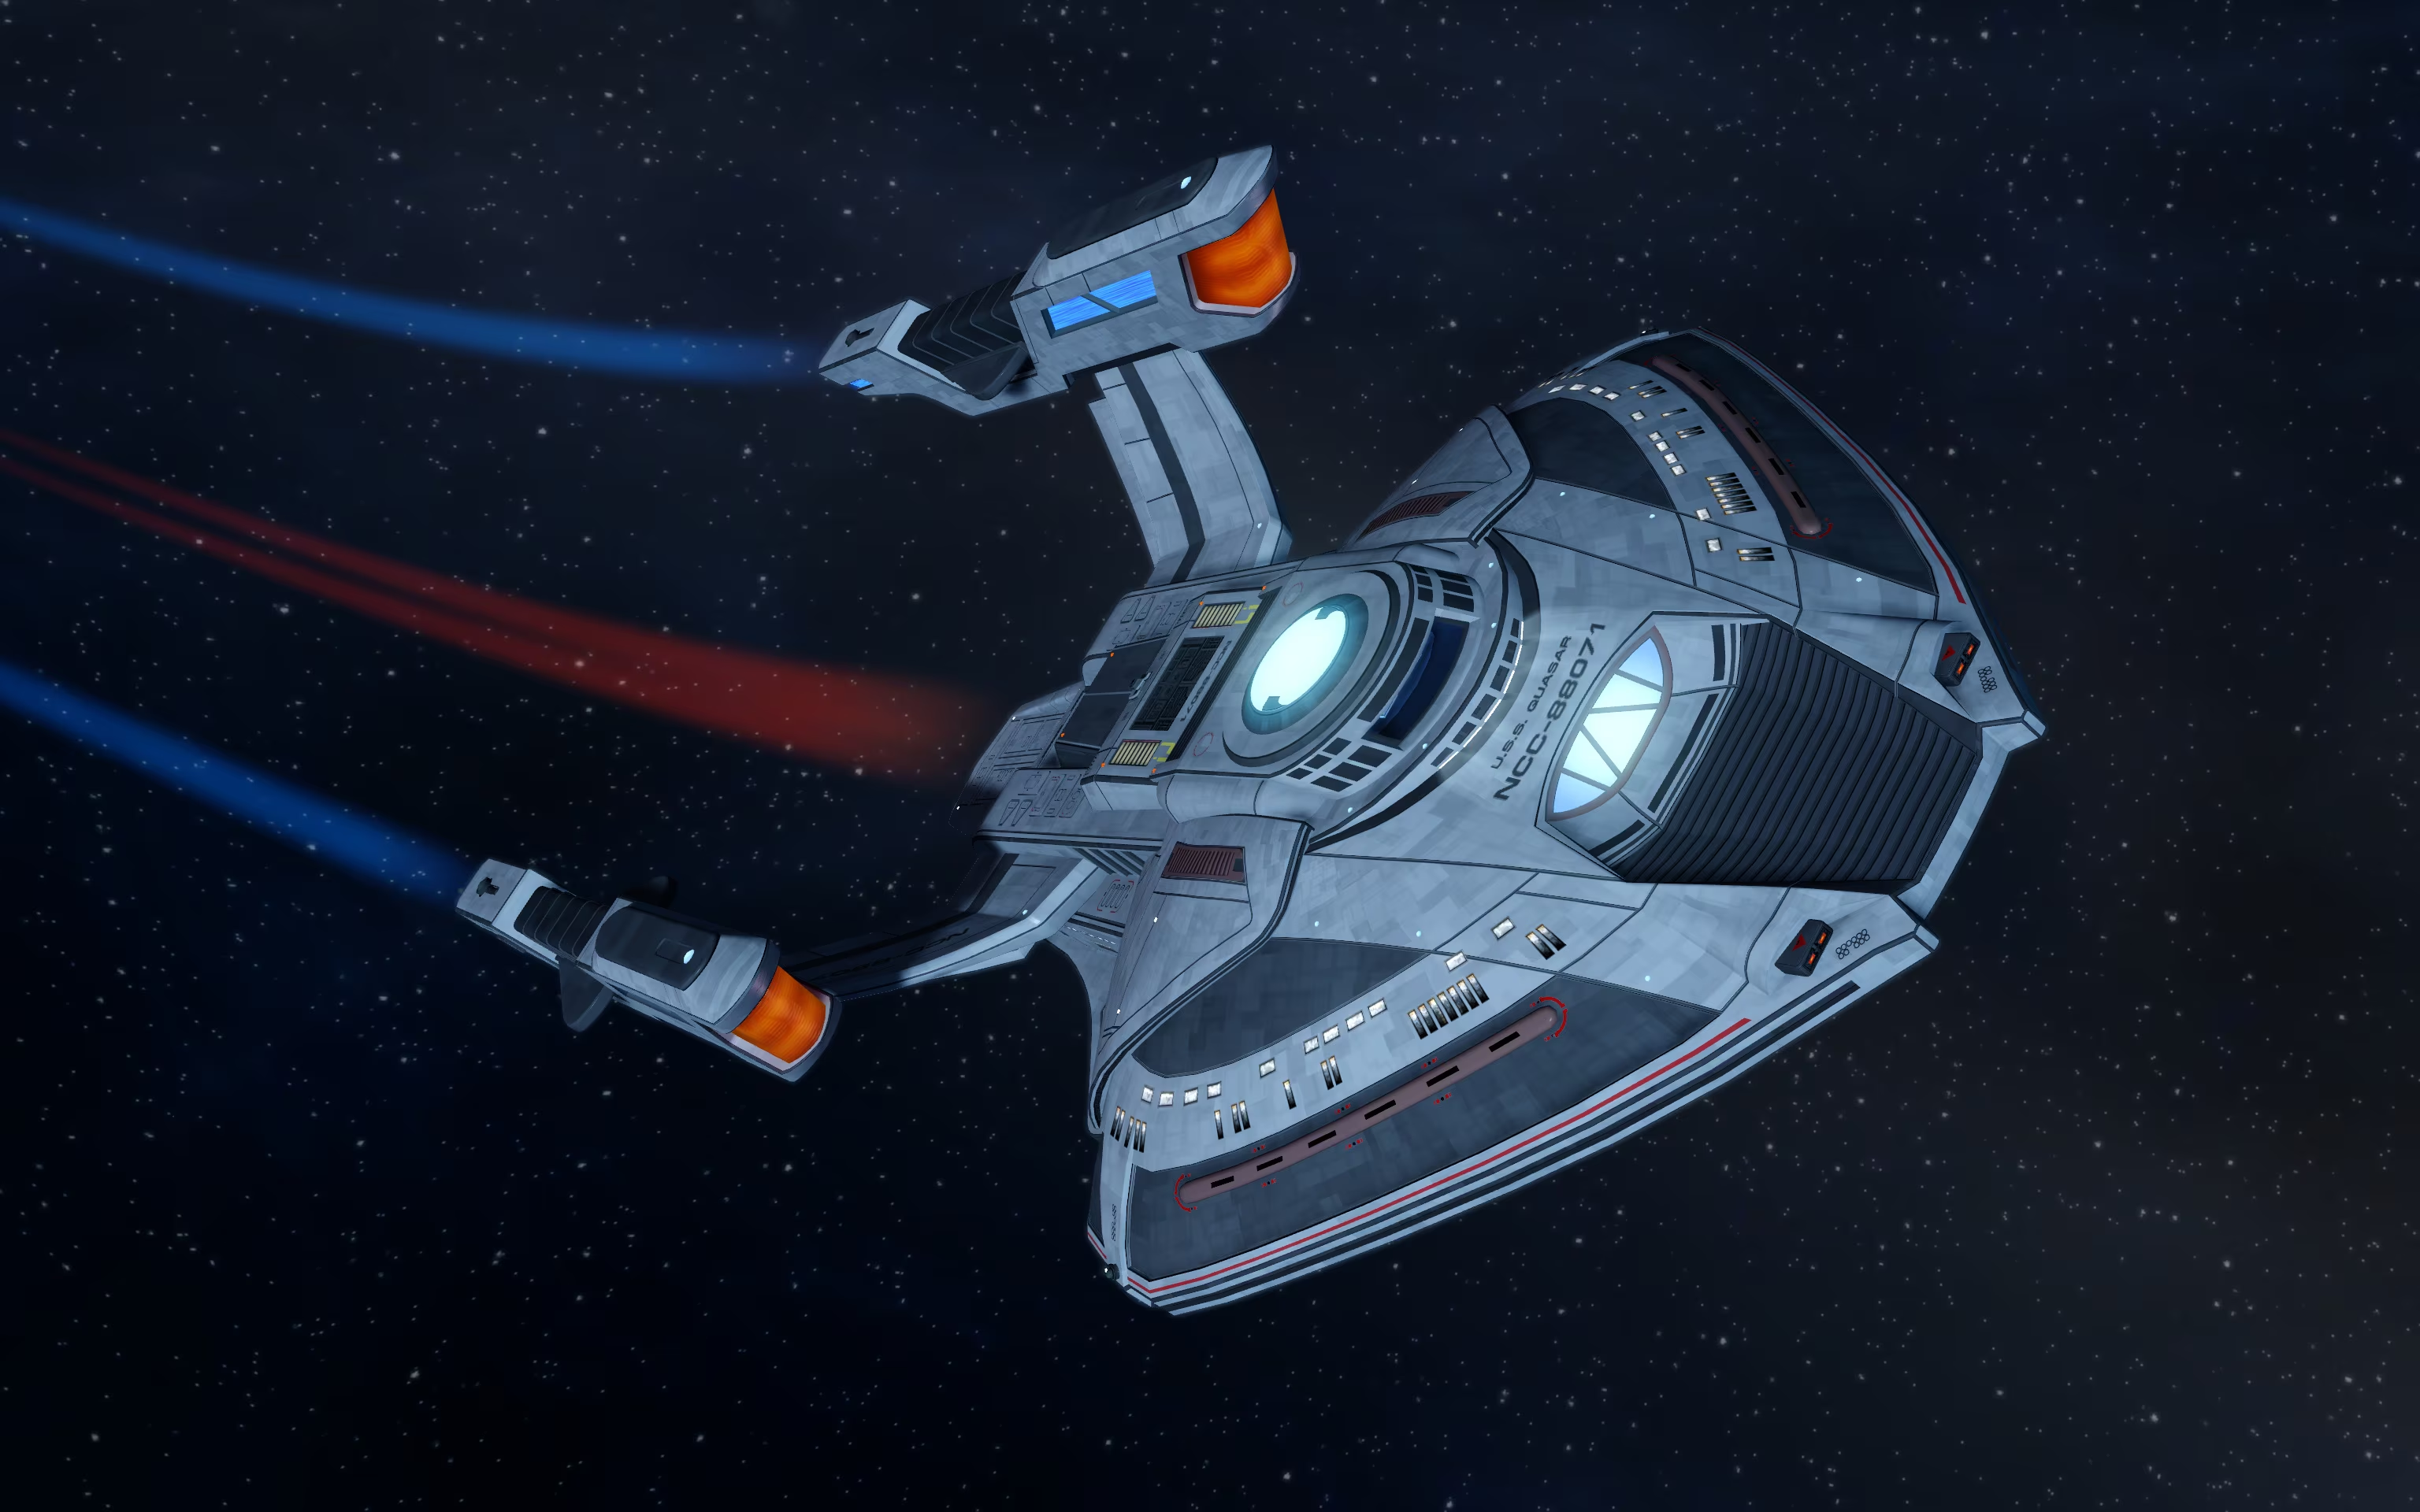 The new STO Quasar-class